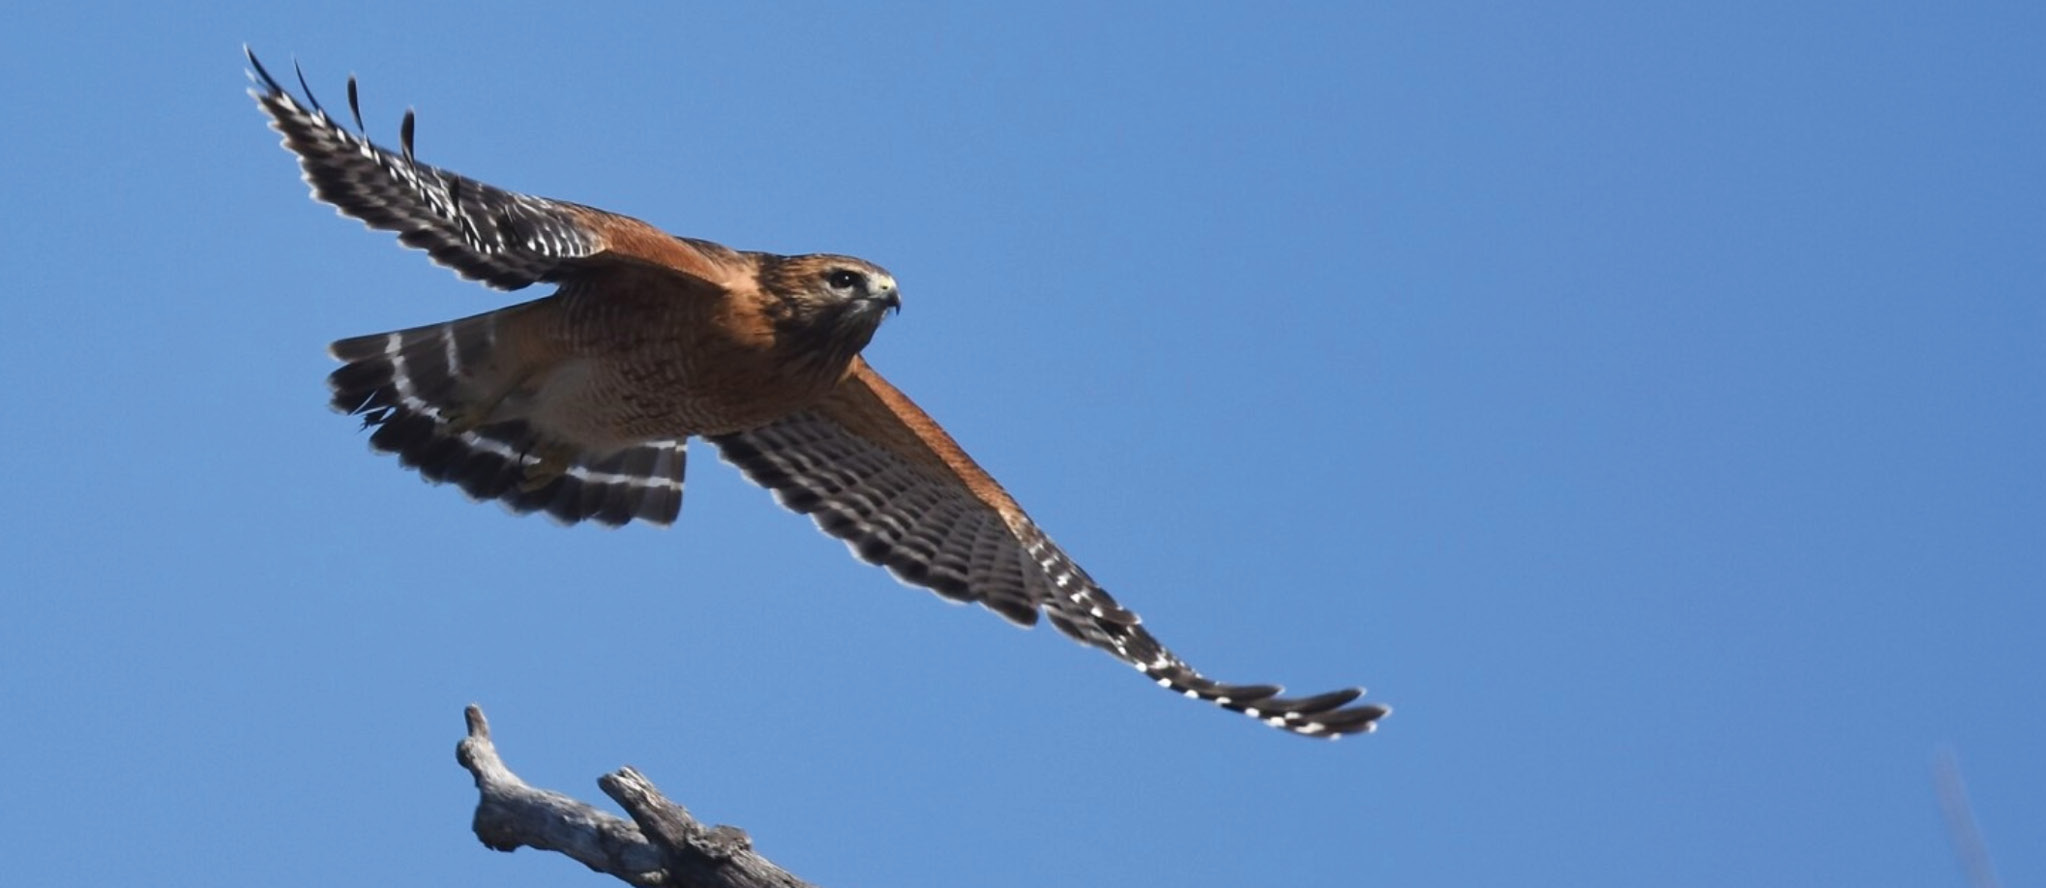 A hawk soars against a blue sky.